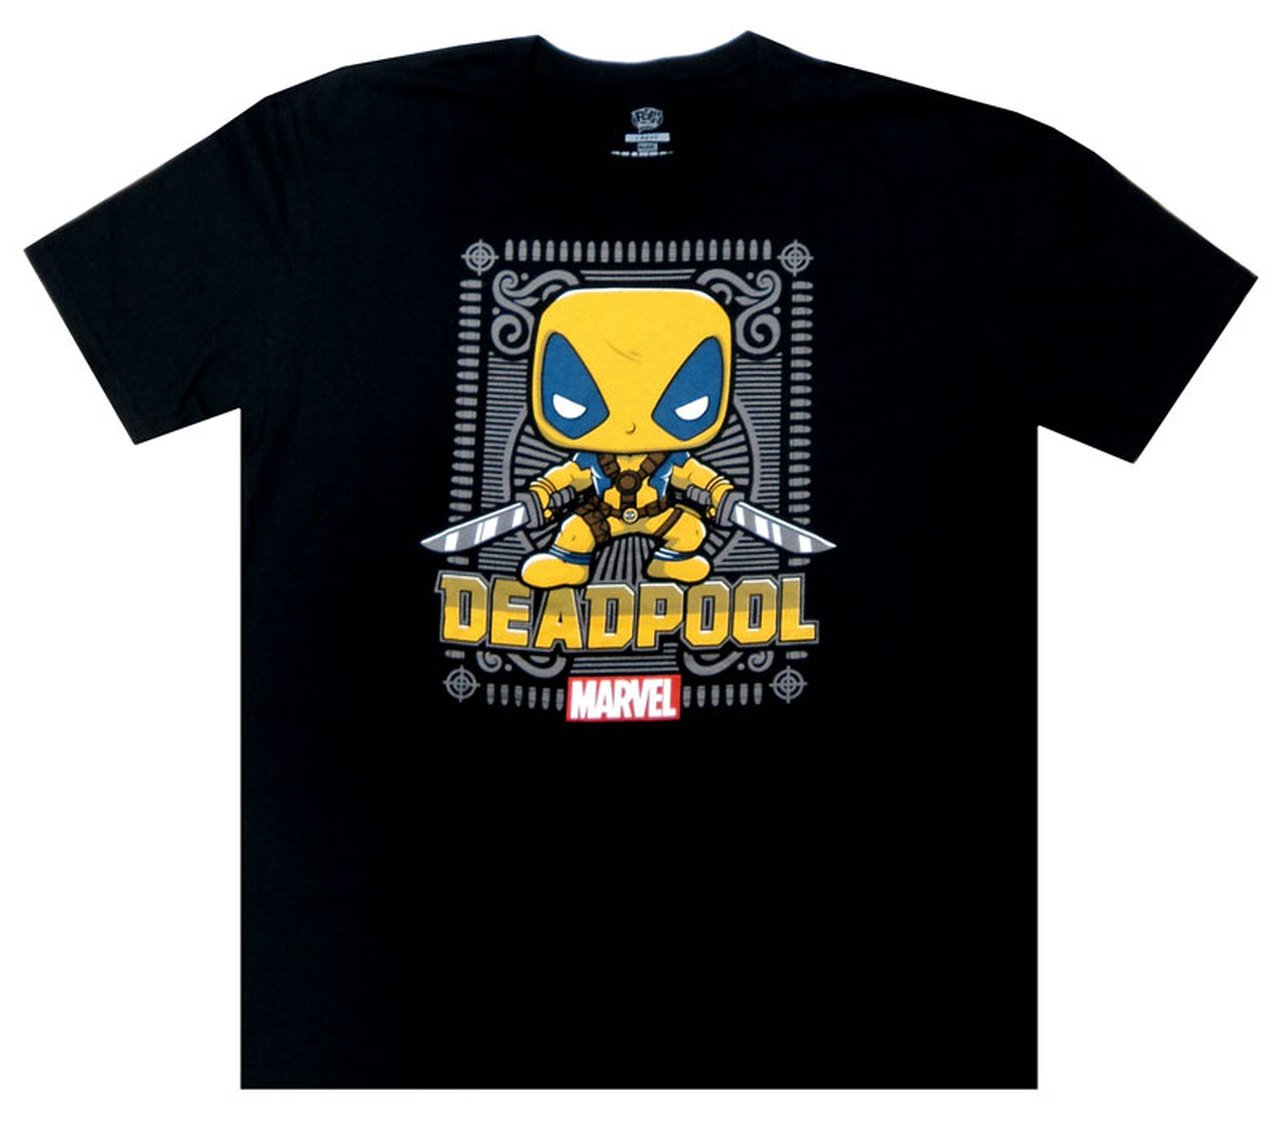 Mens Funko Pop! Black Deadpool Ornate Gold Graphic T-Shirt